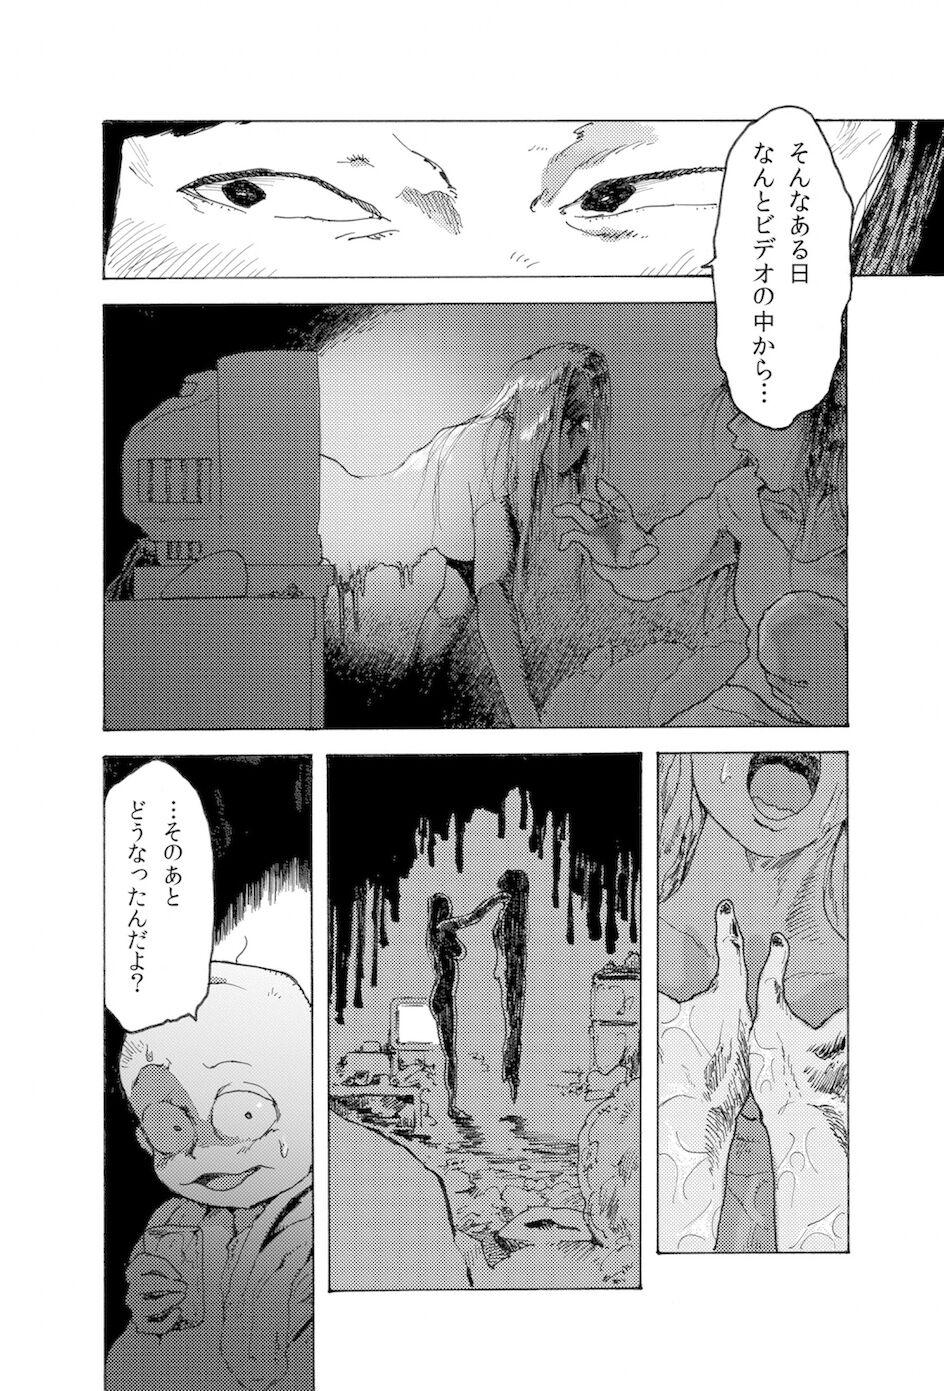 Hot Chicks Fucking [Koshigerunasunibusu] WEB Sairoku [R18G] 'AIN'T SIX IS DEATH' - Osomatsu san Hunk - Page 3